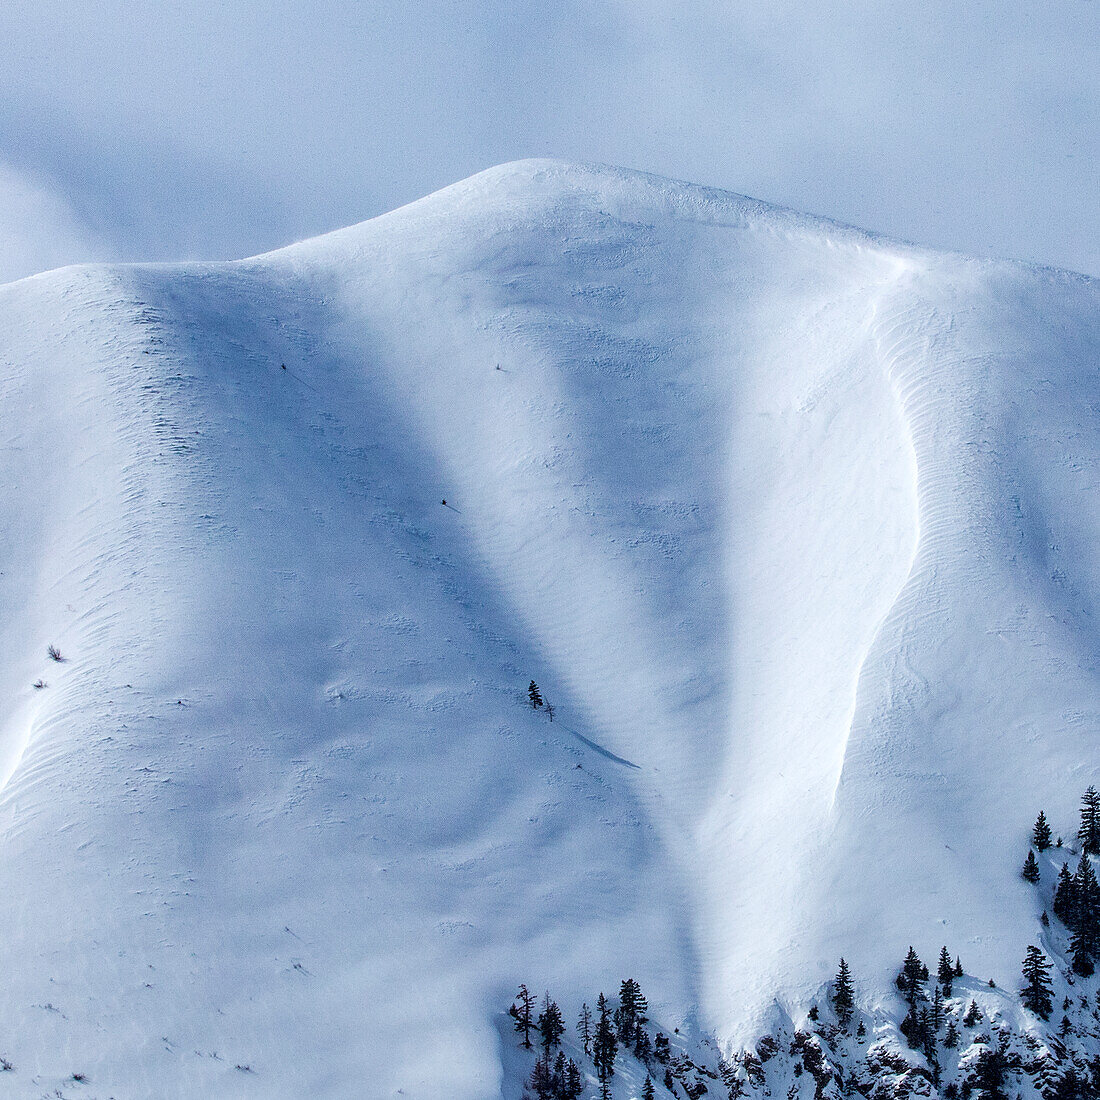 USA, Idaho, Hailey, Scenic view of snowcapped mountain